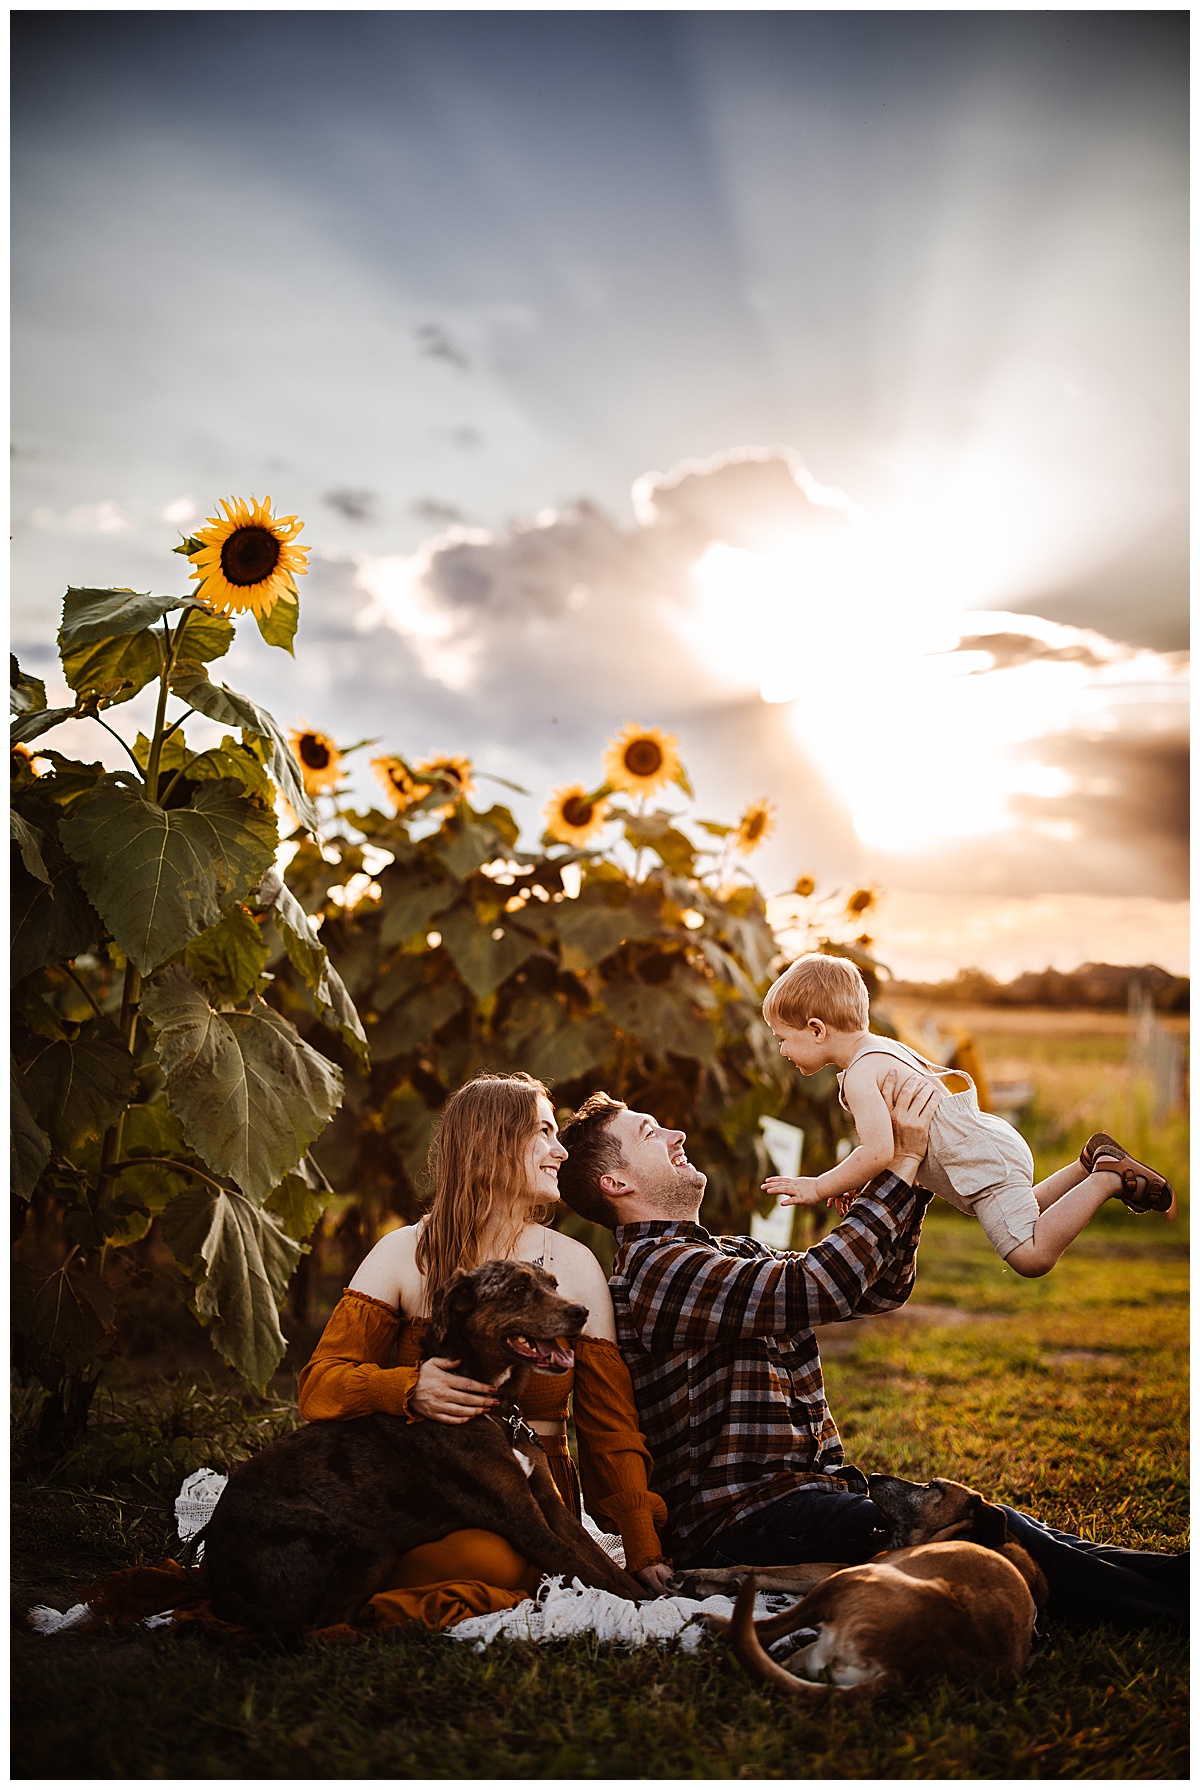 Family lift boy in air in Sunflower Field 